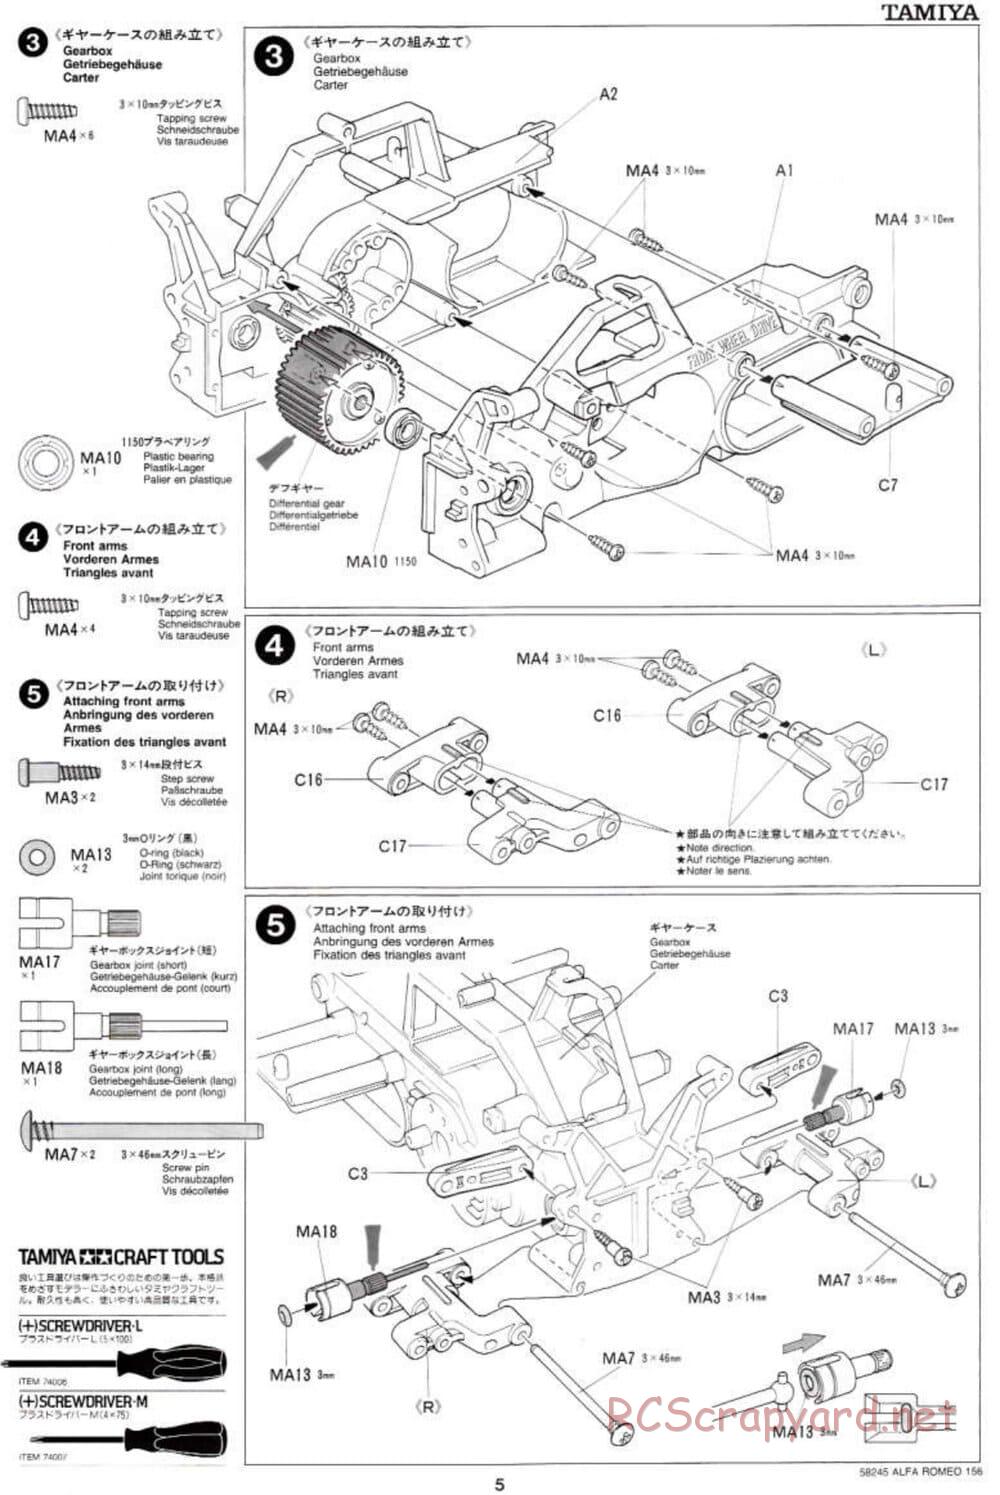 Tamiya - Alfa Romeo 156 Racing - FF-02 Chassis - Manual - Page 5